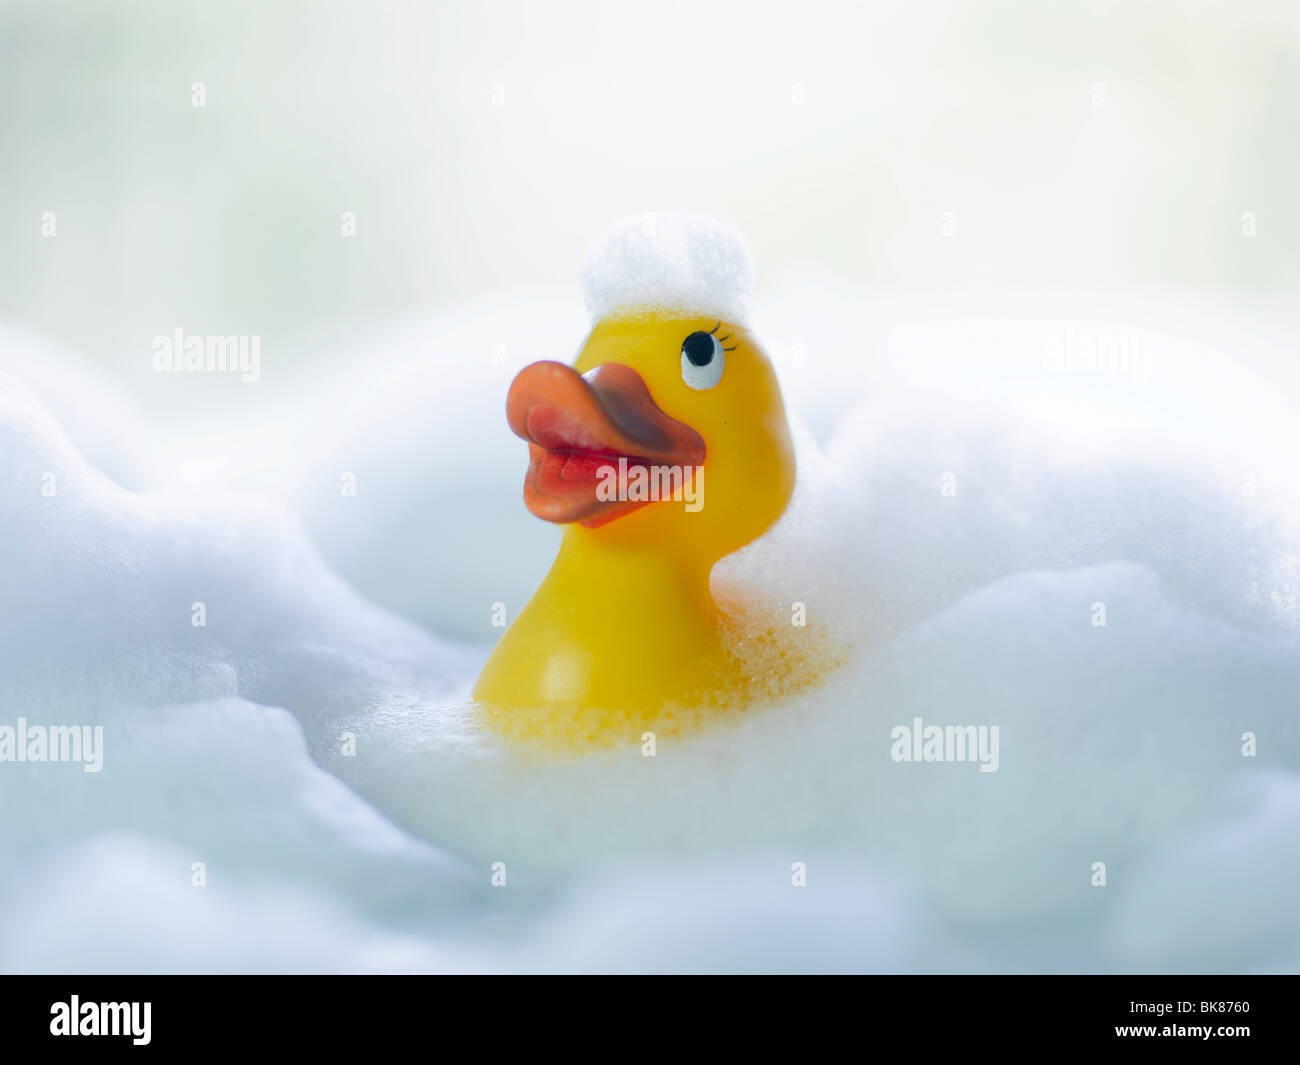 Rubber duck, plastic duck, yellow, foam Stock Photo